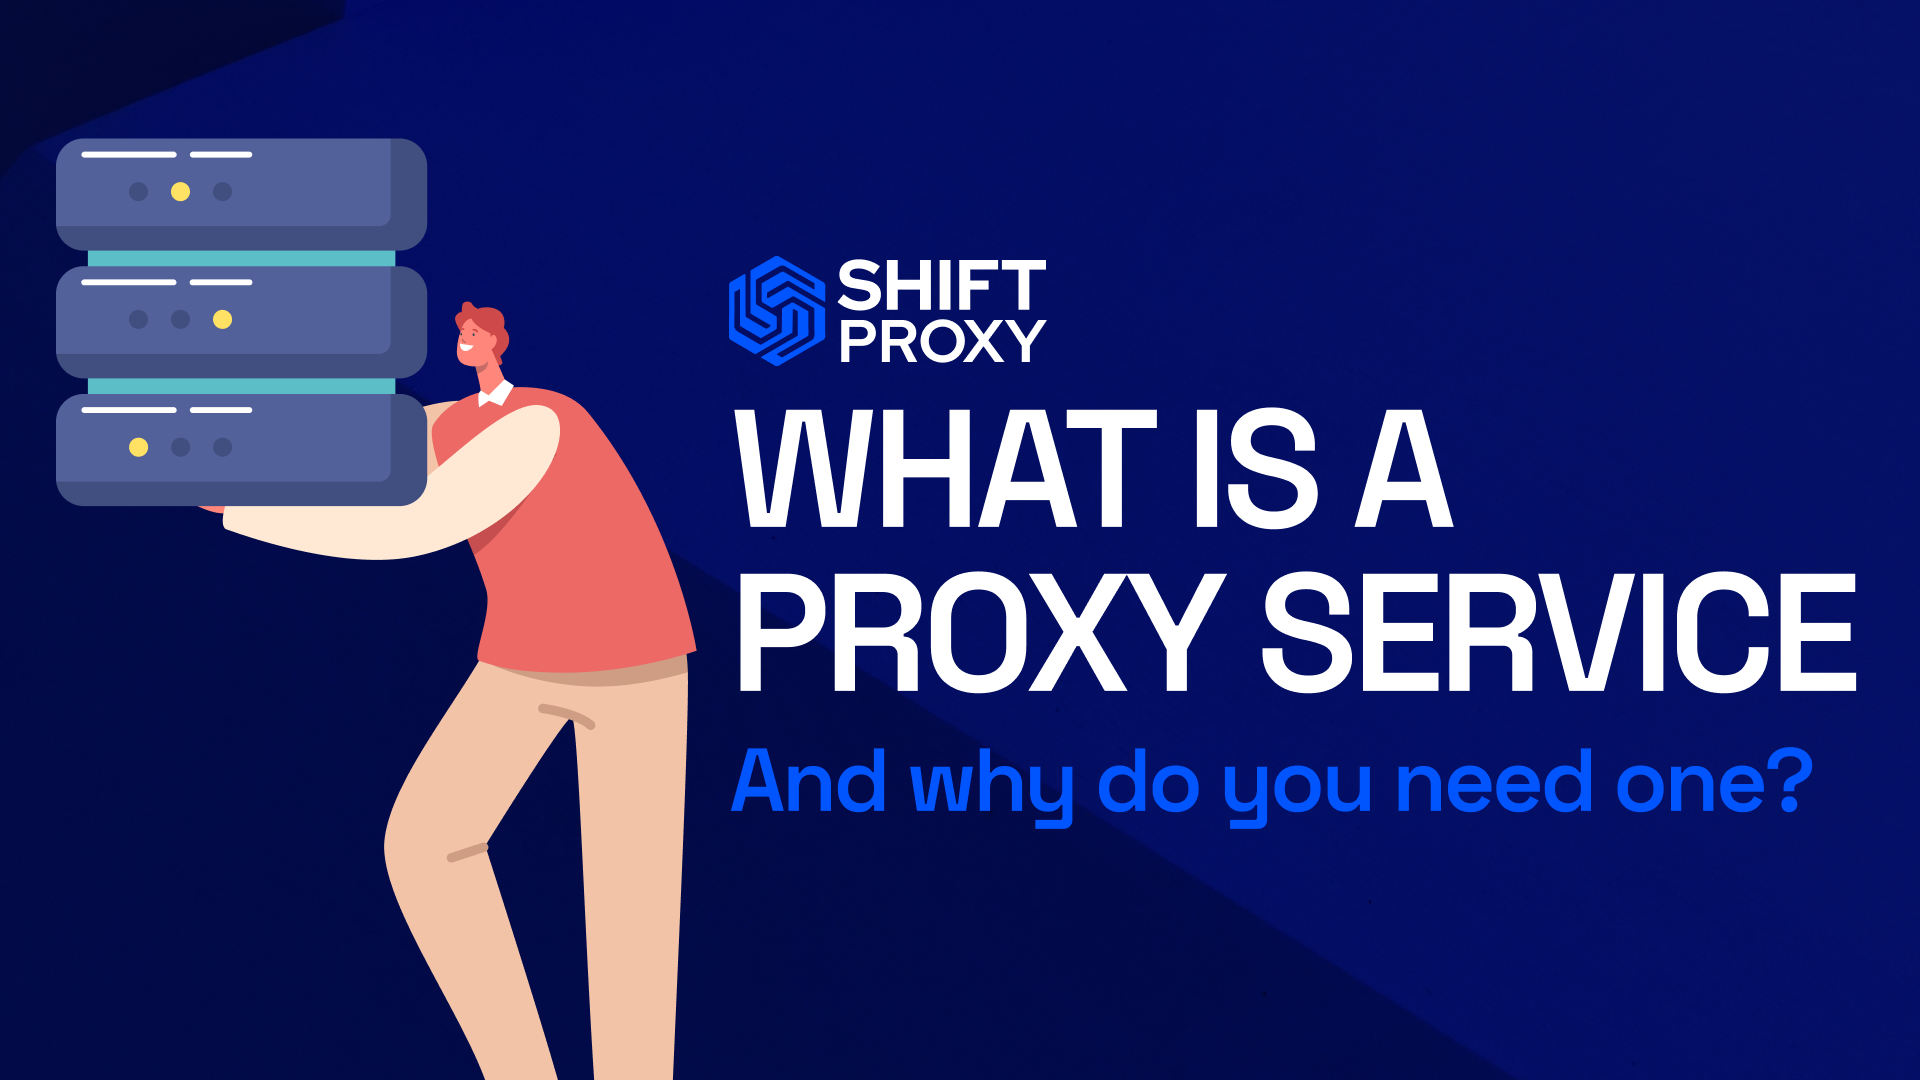 Shiftproxy proxy service